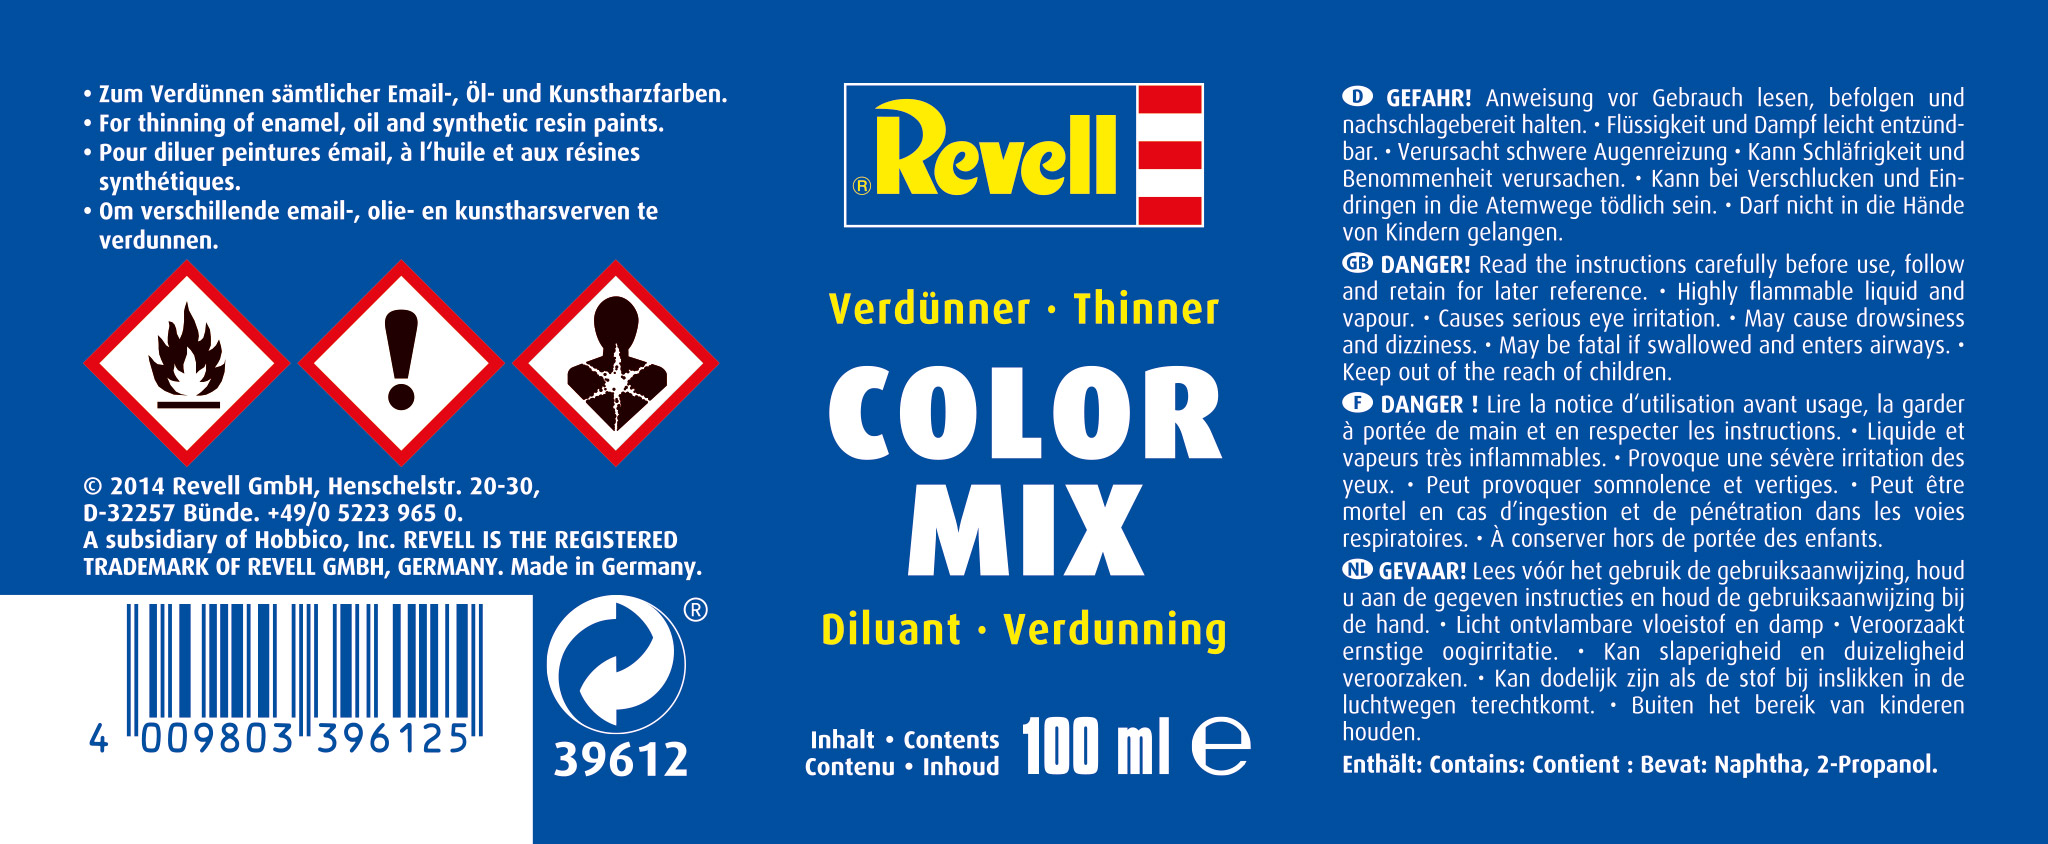 revell-39612-2-color-mix-verdünnung